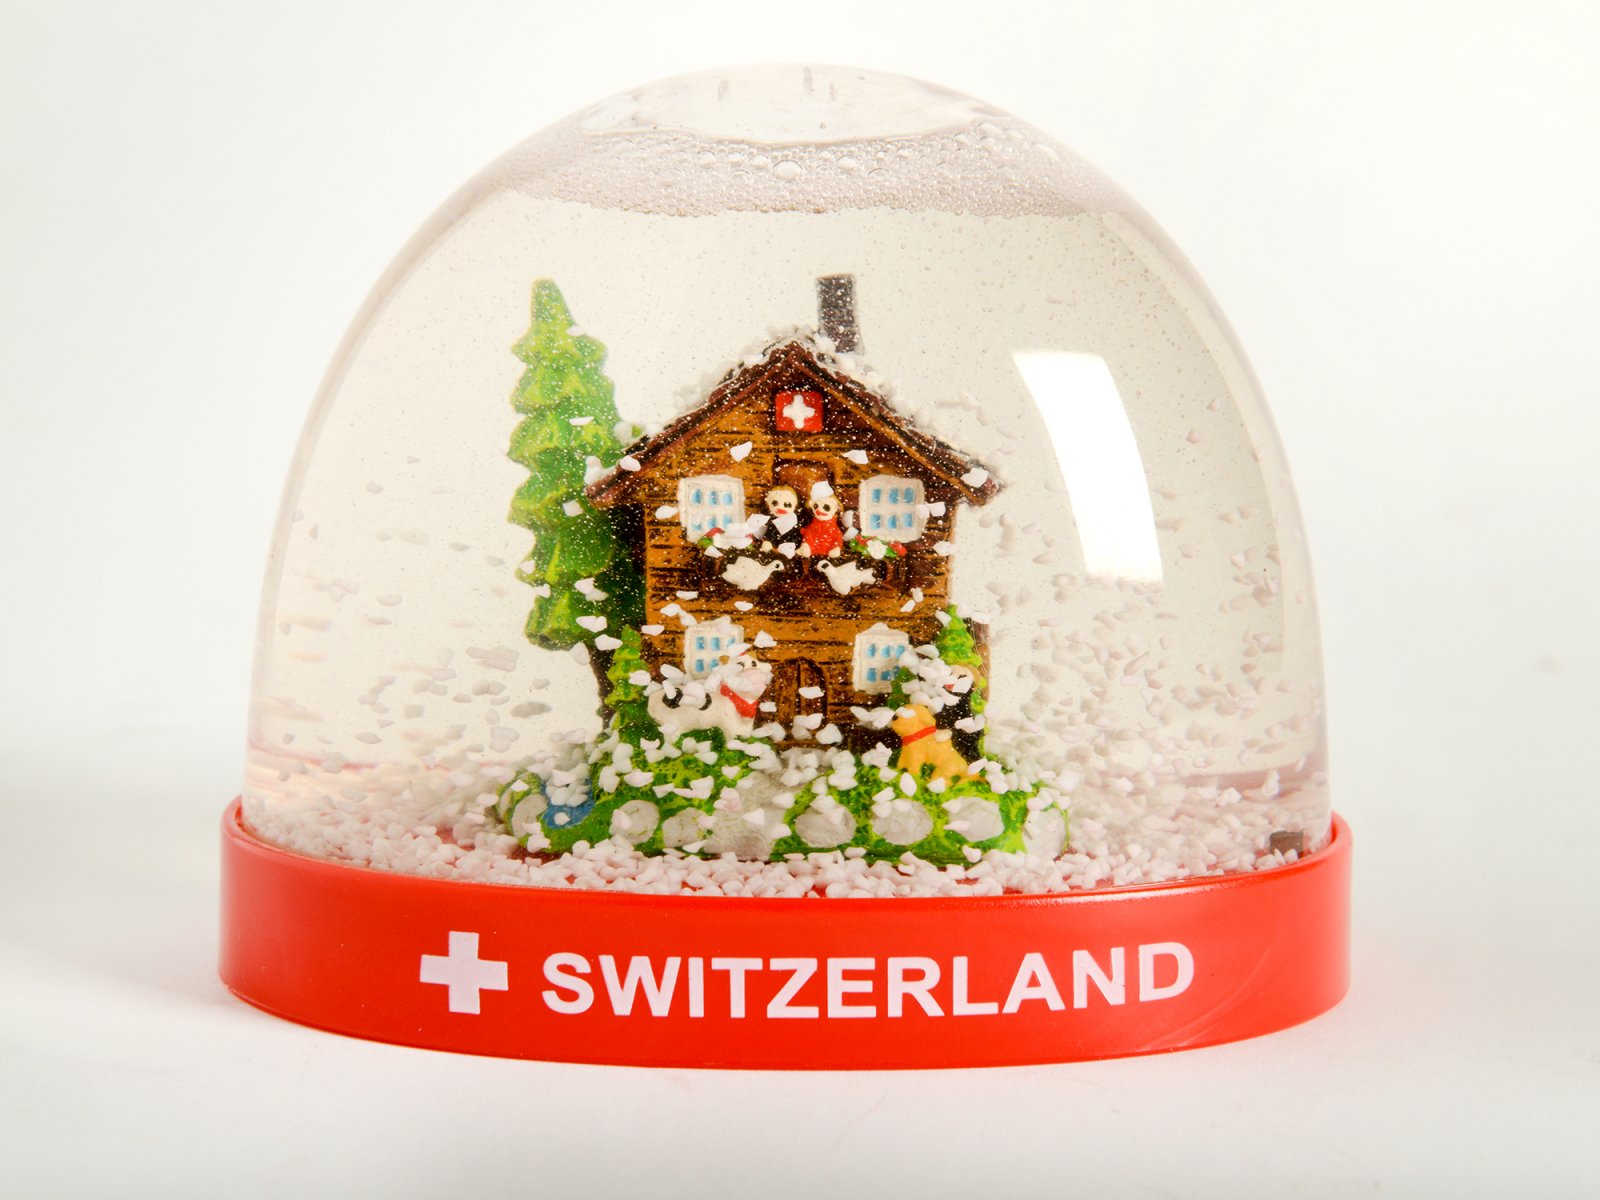 Souvenir Snow Globe of Switzerland